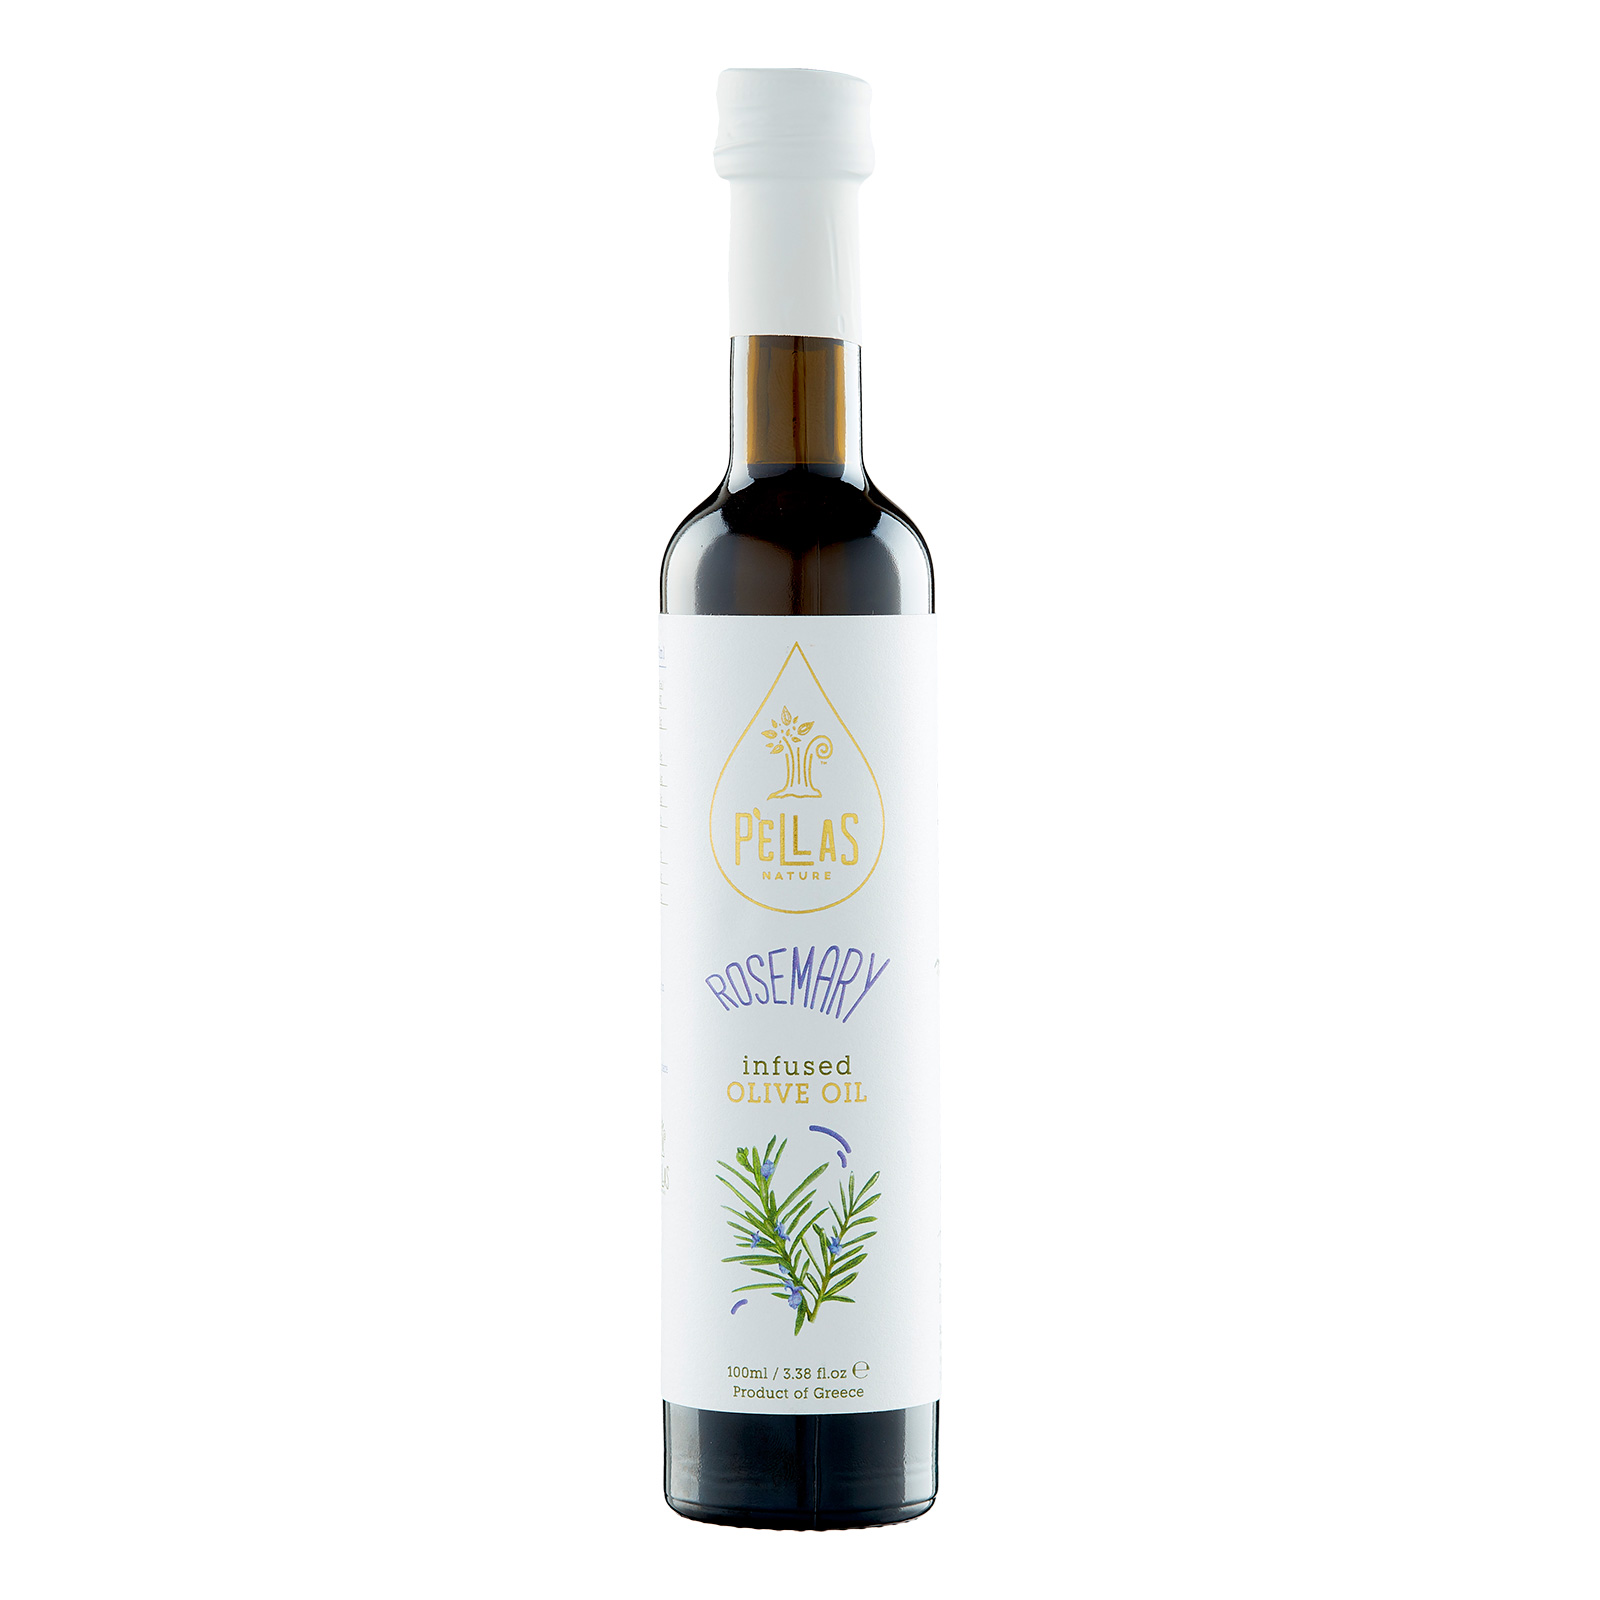 Pellas Nature Rosemary infused Extra Virgin Olive Oil 3.38 fl.oz Bottle